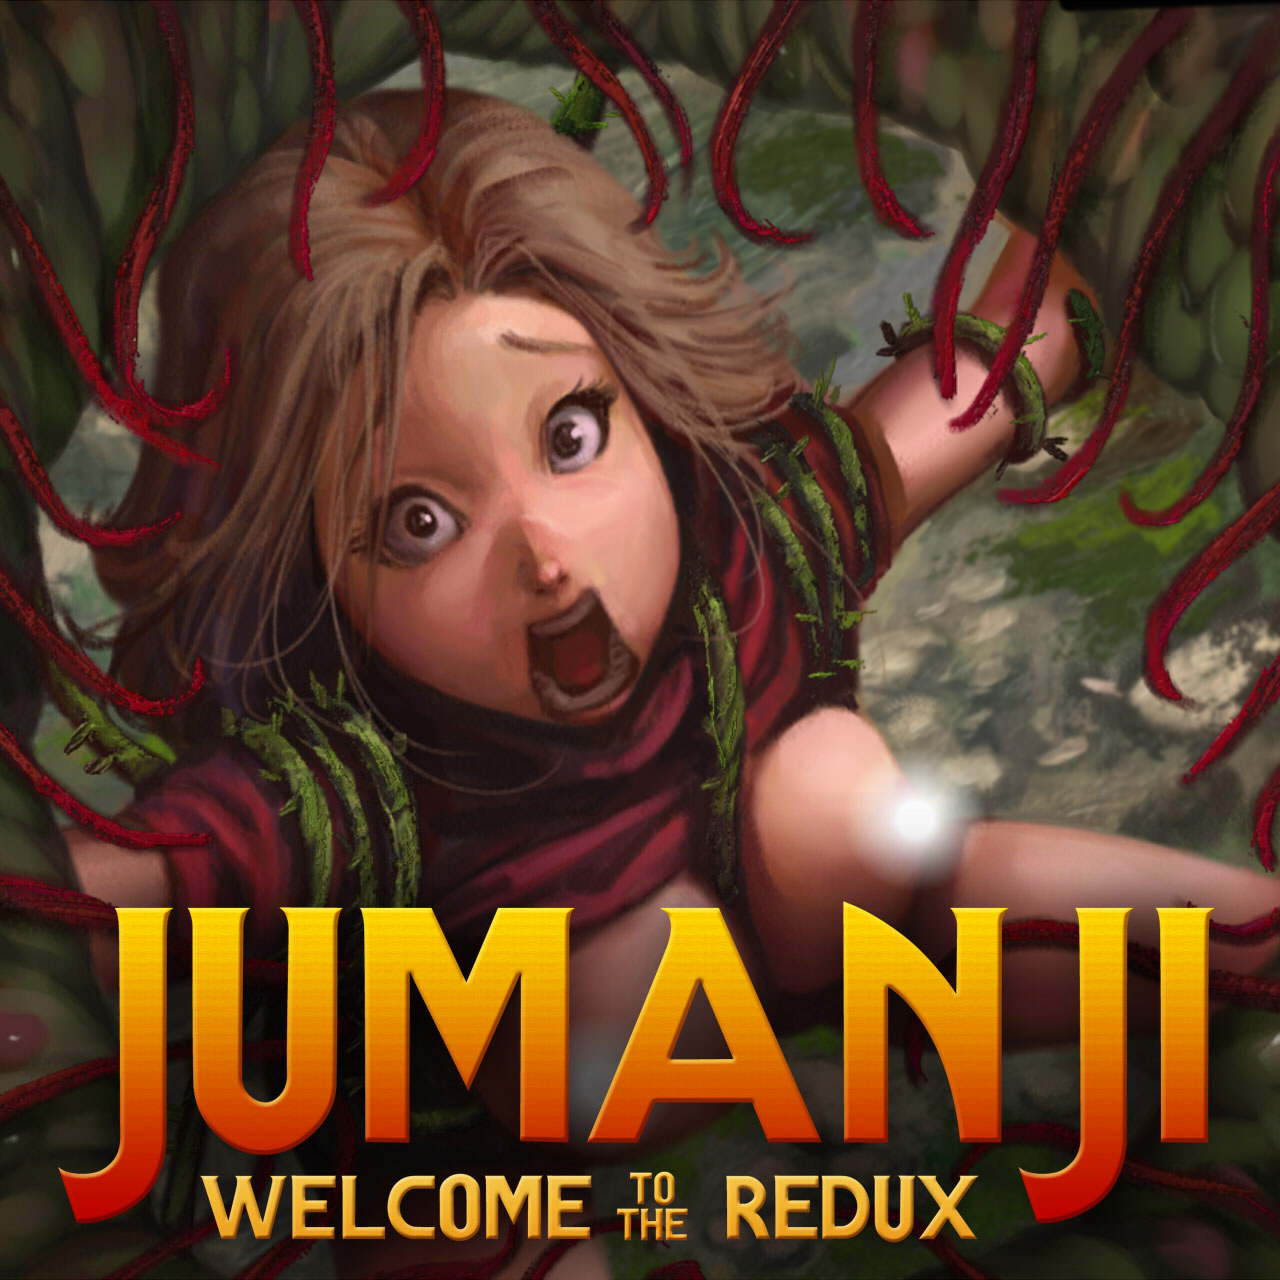 Jumanji: Welcome to the Redux